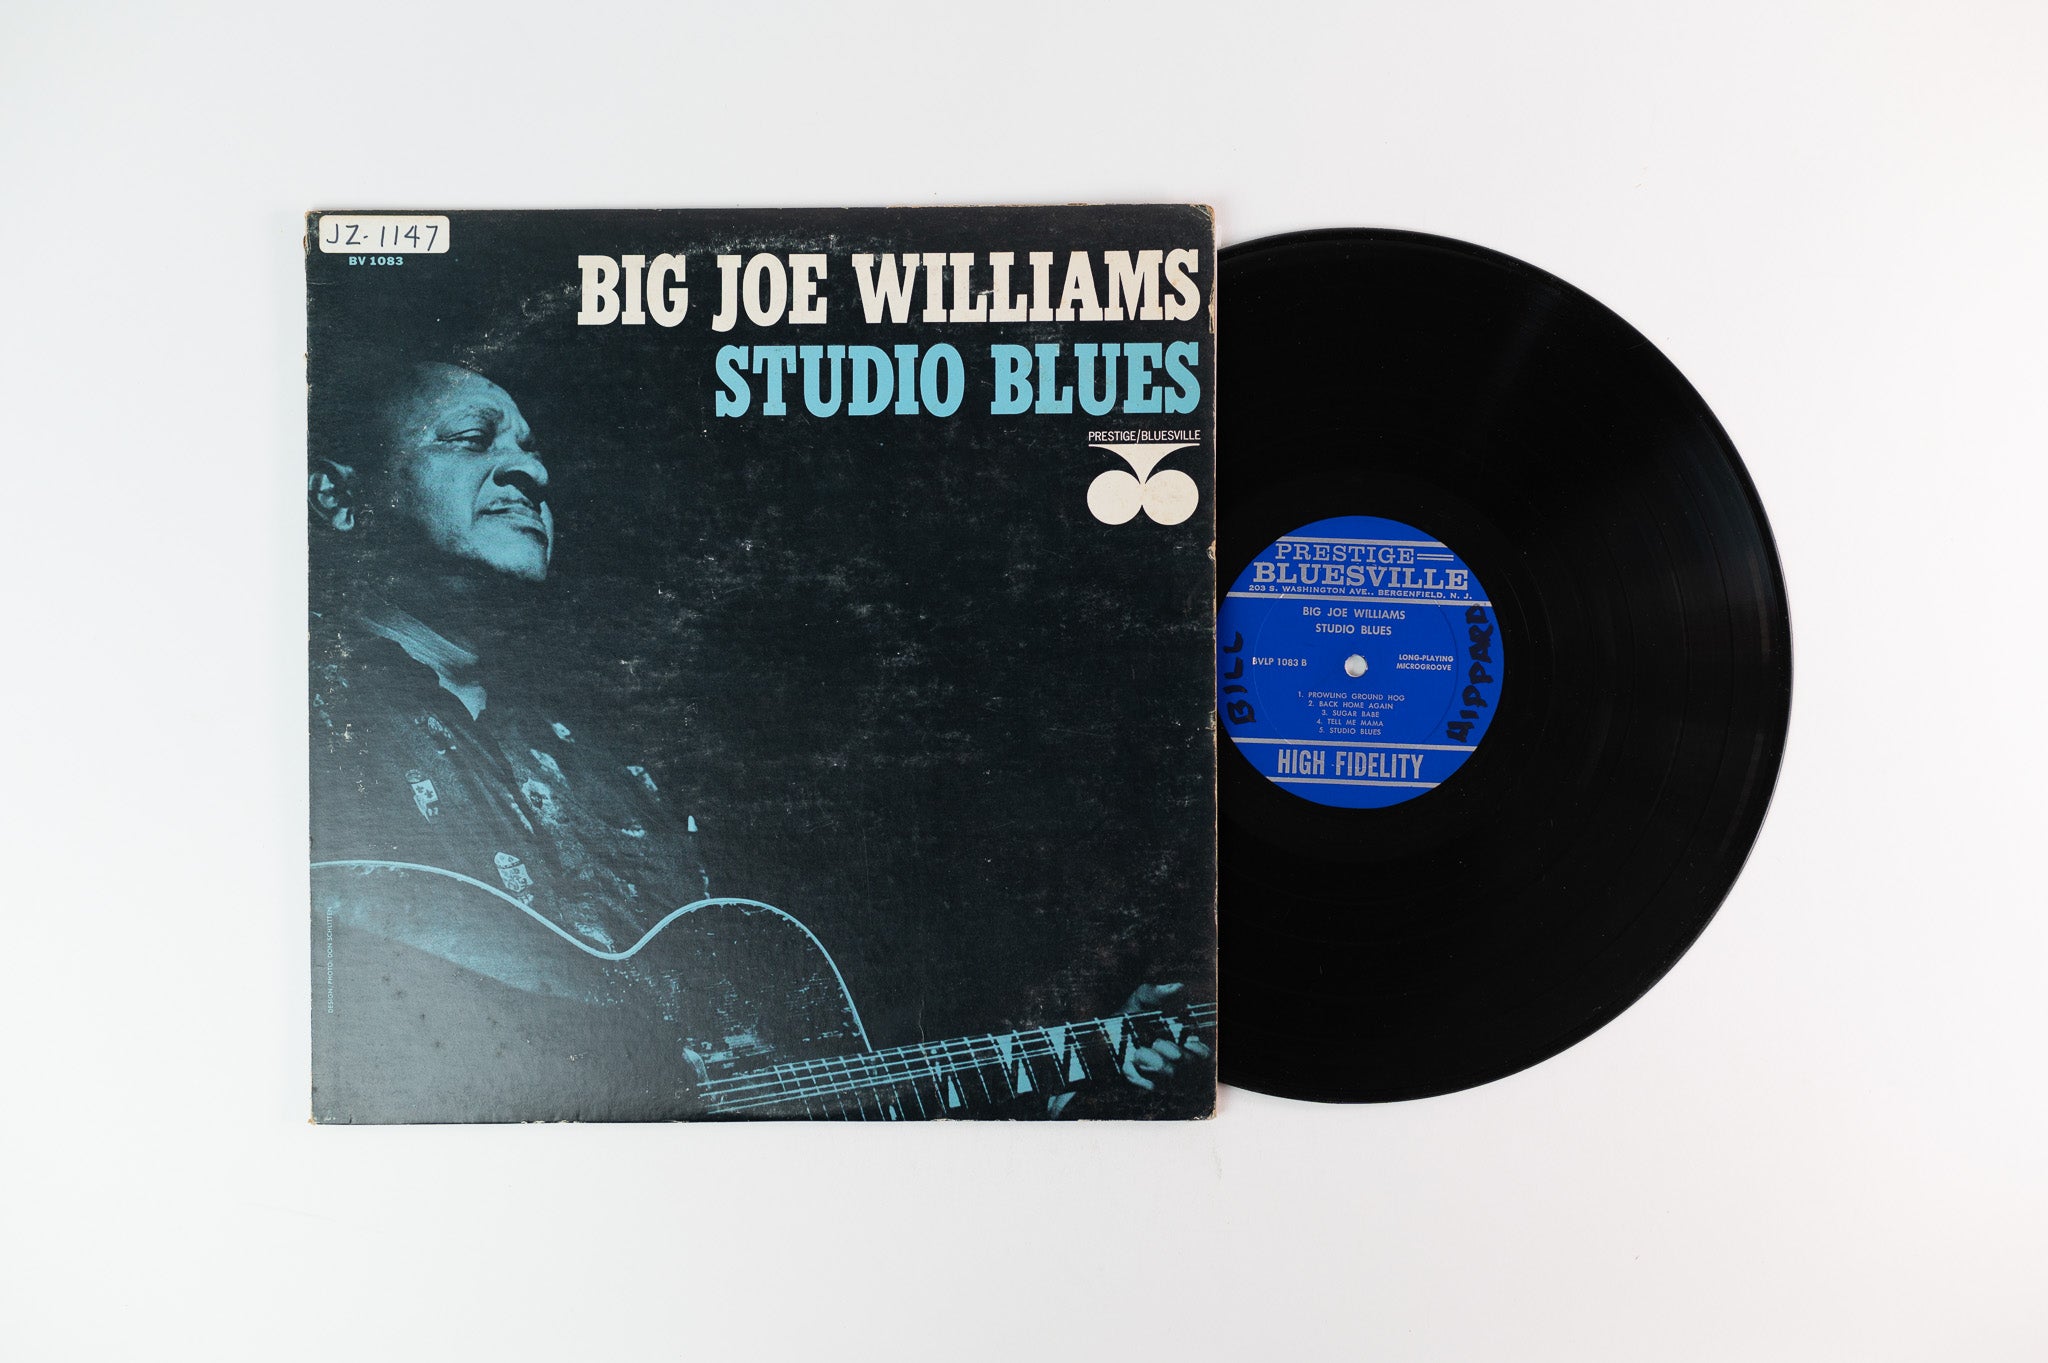 Big Joe Williams - Studio Blues on Prestige Bluesville